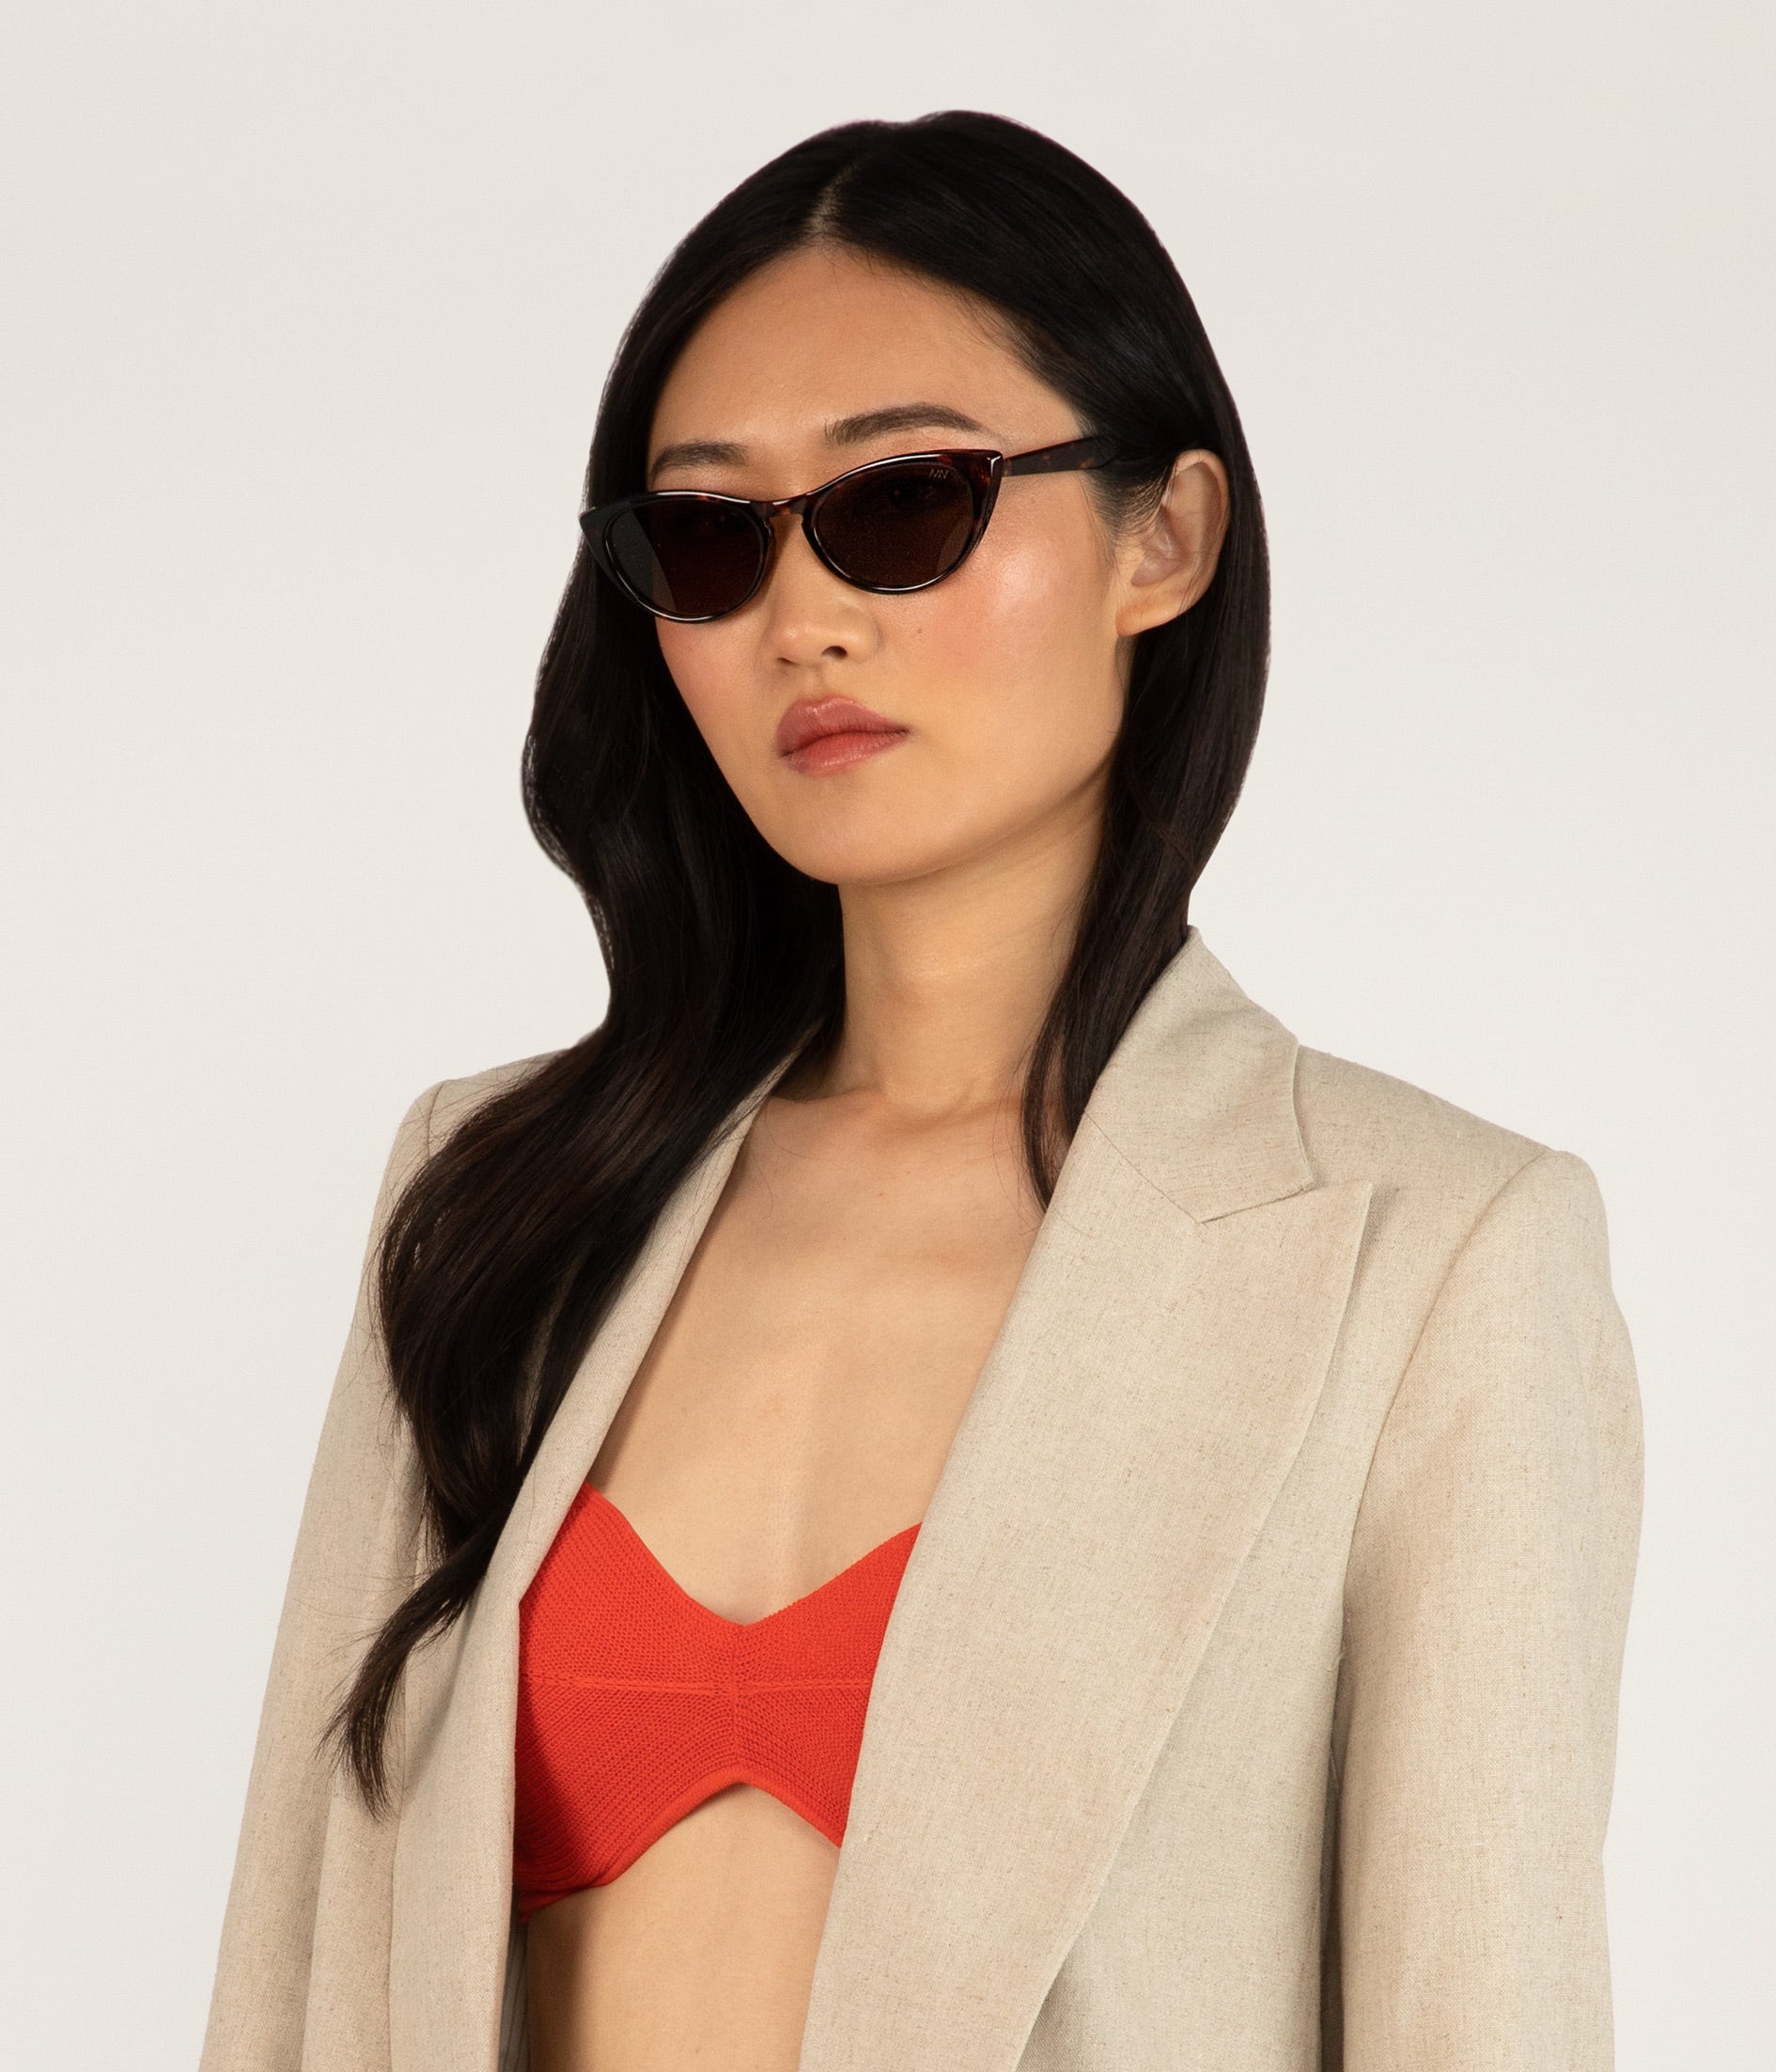 variant:: brun -- amara sunglasses brun